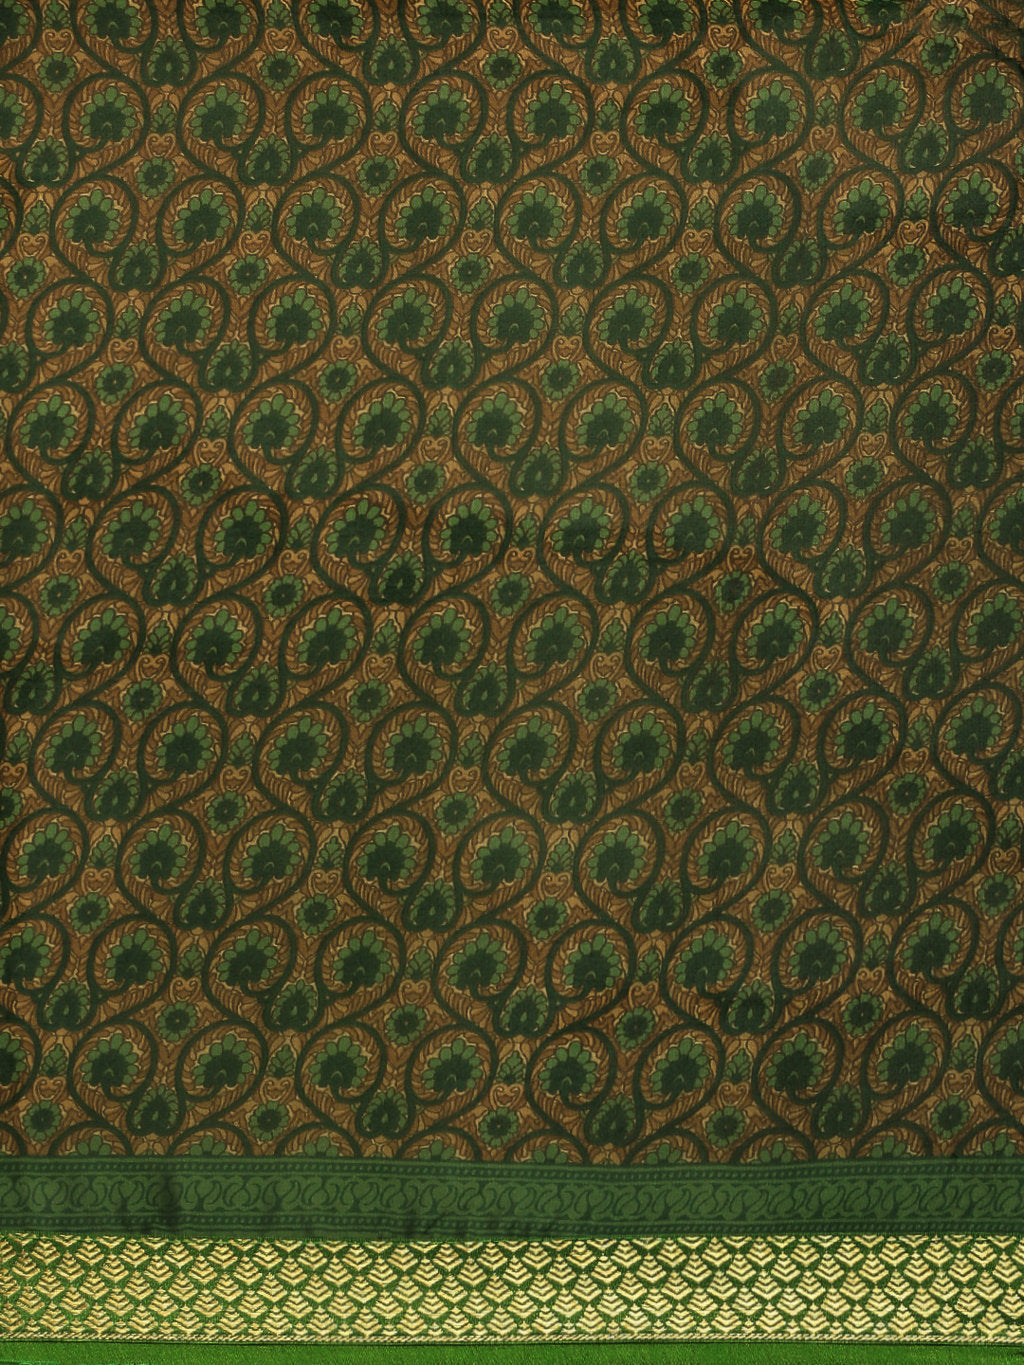 Women's Green Crepe Printed Daily Wear Saree - Sangam Prints